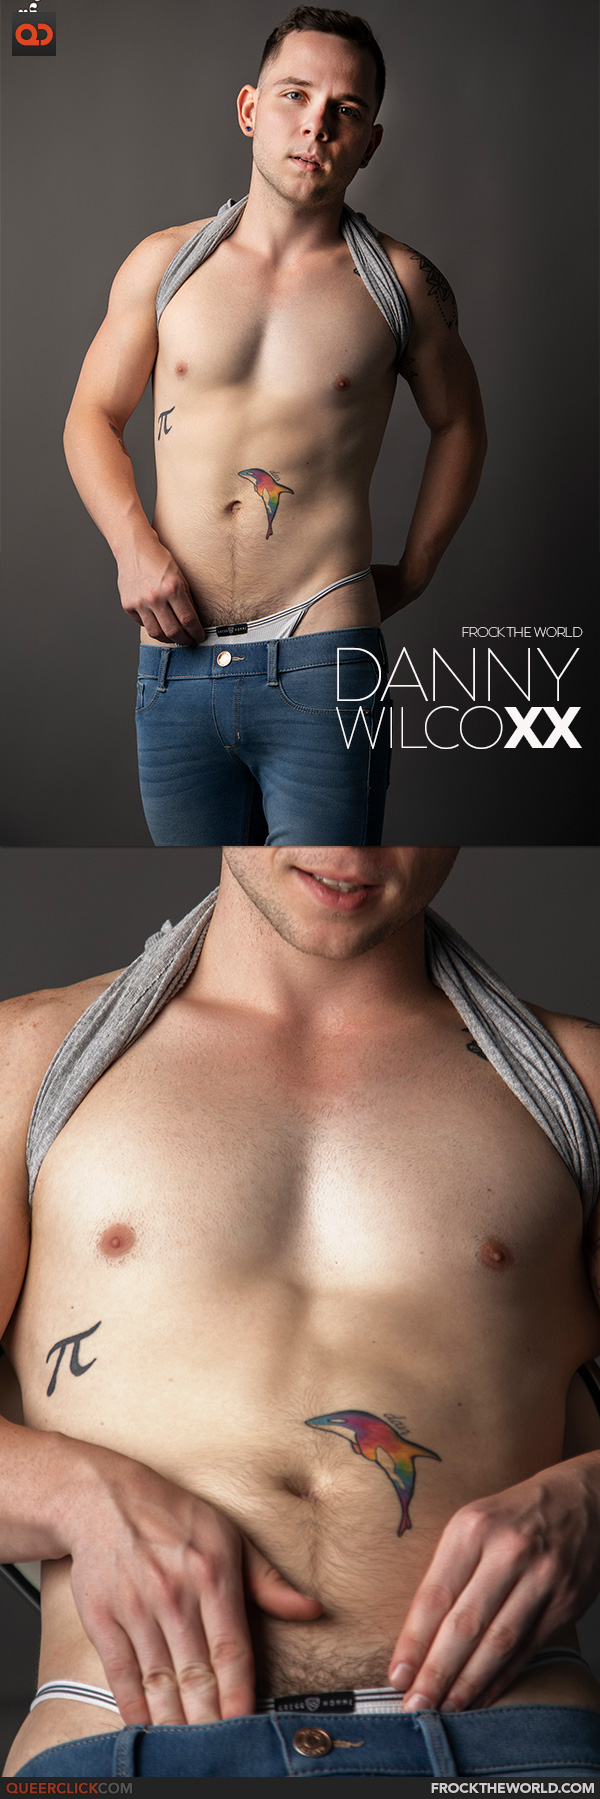 Frock The World: Danny Wilcoxx